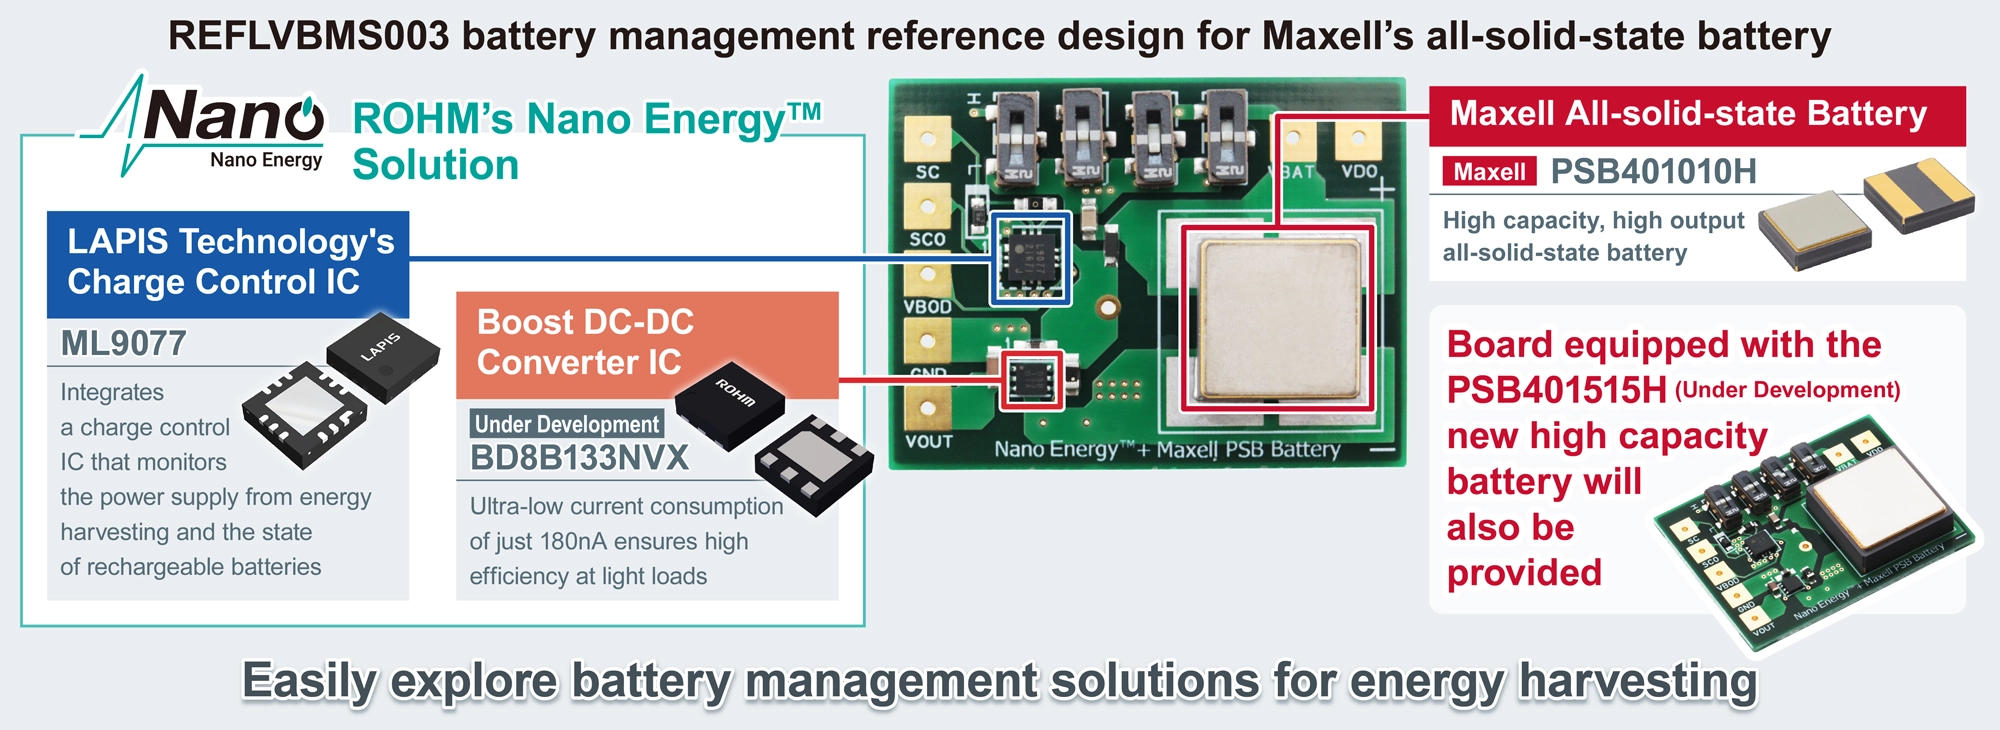 Details of energy harvesting-compatible evaluation module kit